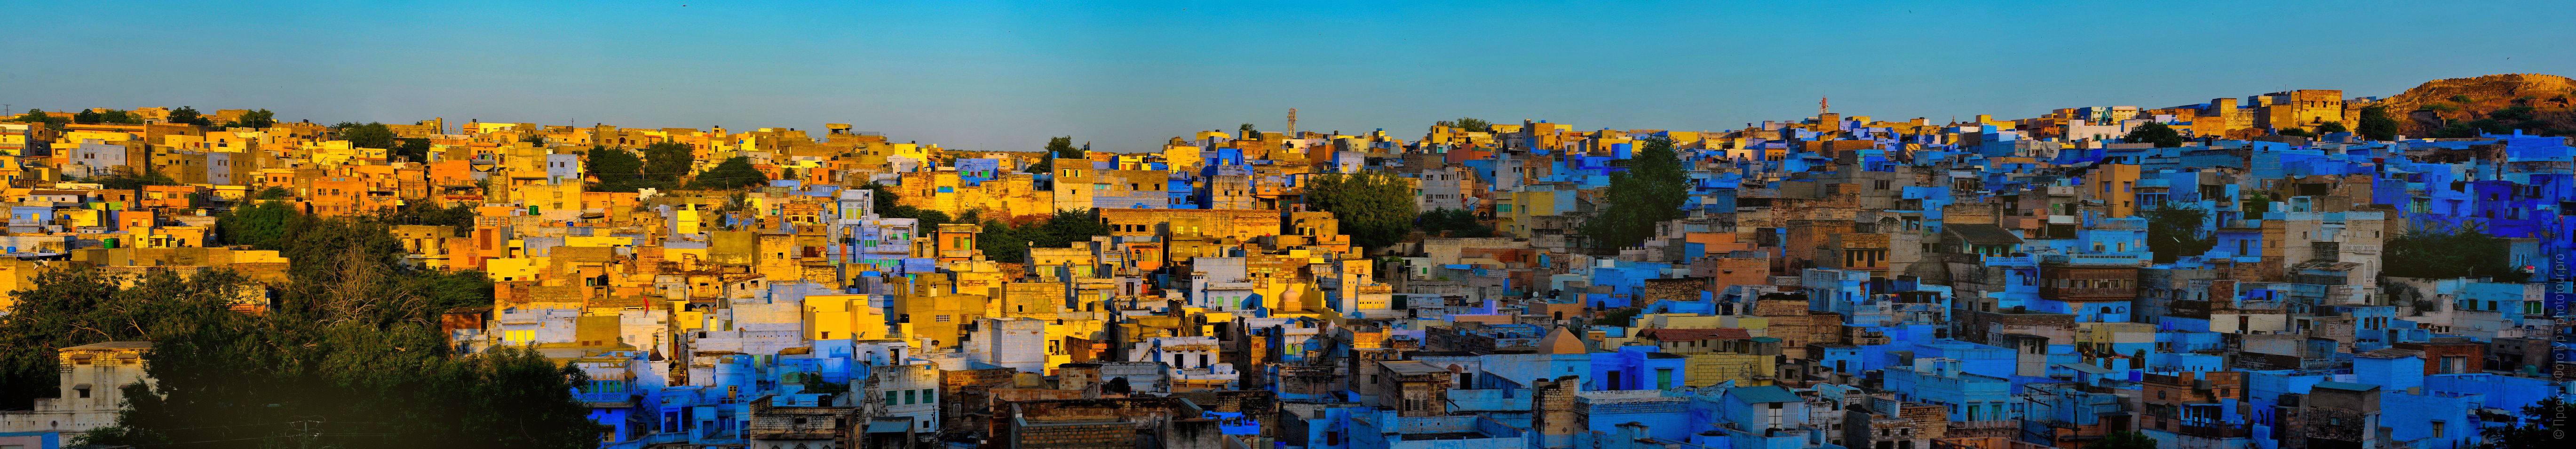 Голубой город-форт Джодхпур, Раджастан. Фототур по Раджахстану.